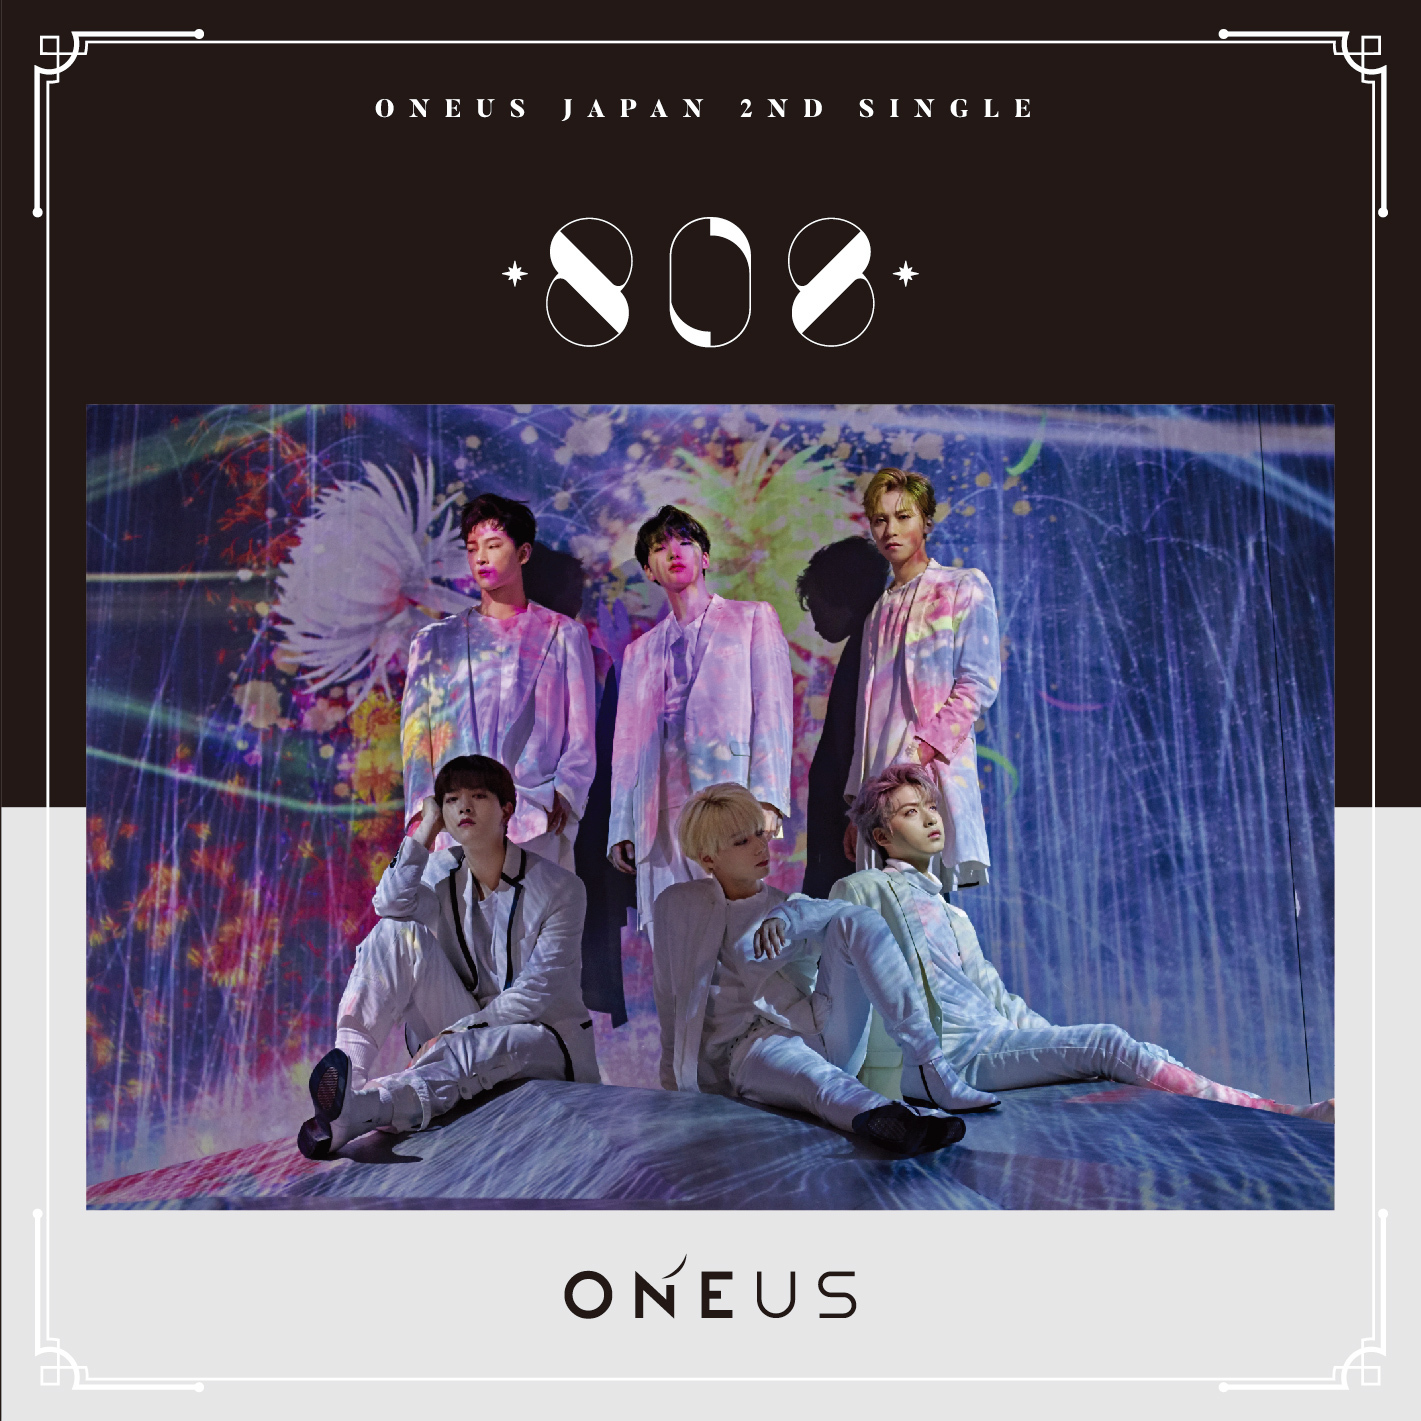 ONEUS JAPAN 2ndシングル「808」発売＆リリースイベント開催決定 | PODA